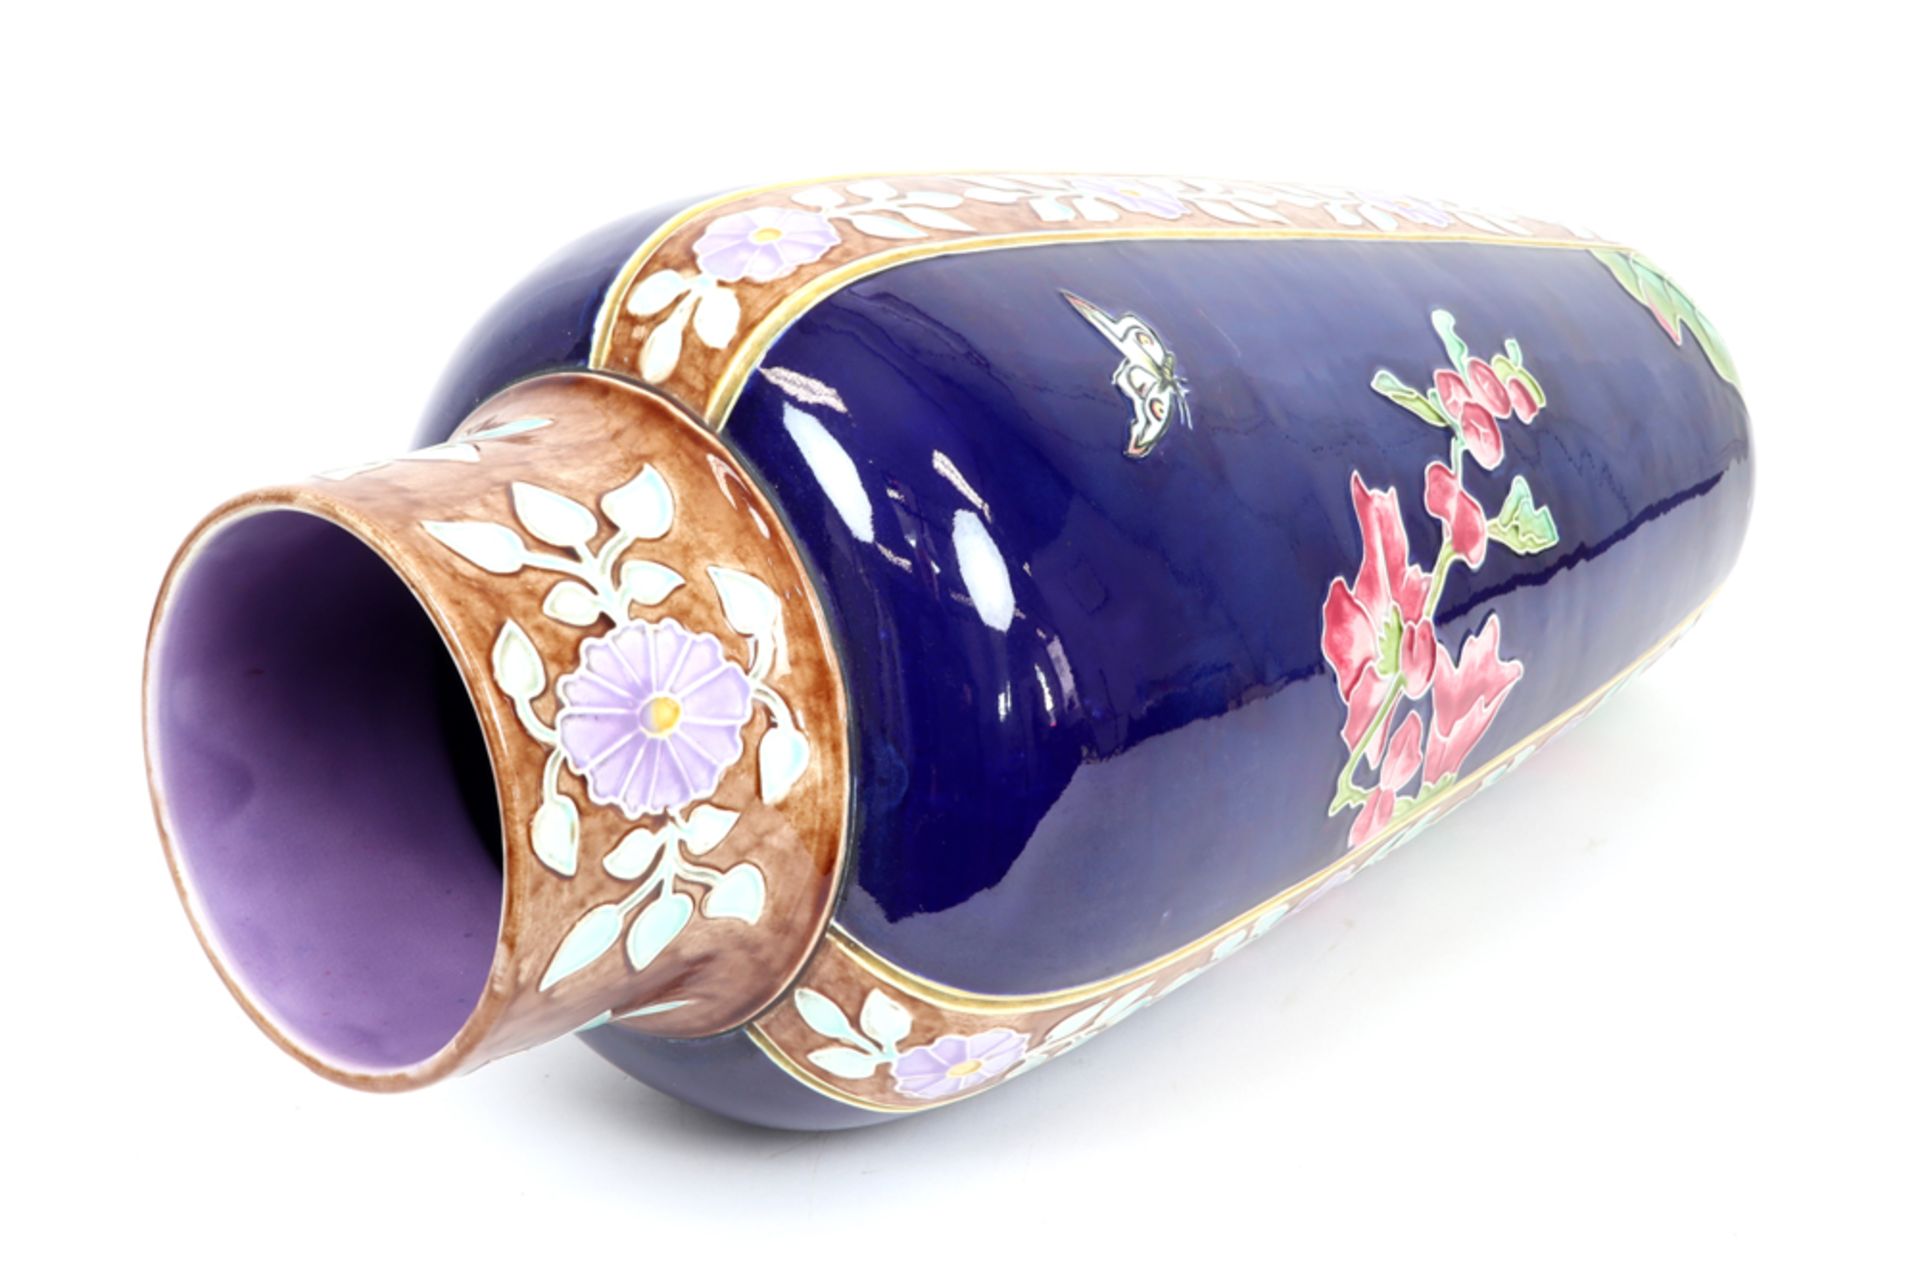 Art Nouveau vase in St-Amand marked ceramic || Art Nouveau-vaas in faïence, gemerkt "St-Amand", - Bild 4 aus 6